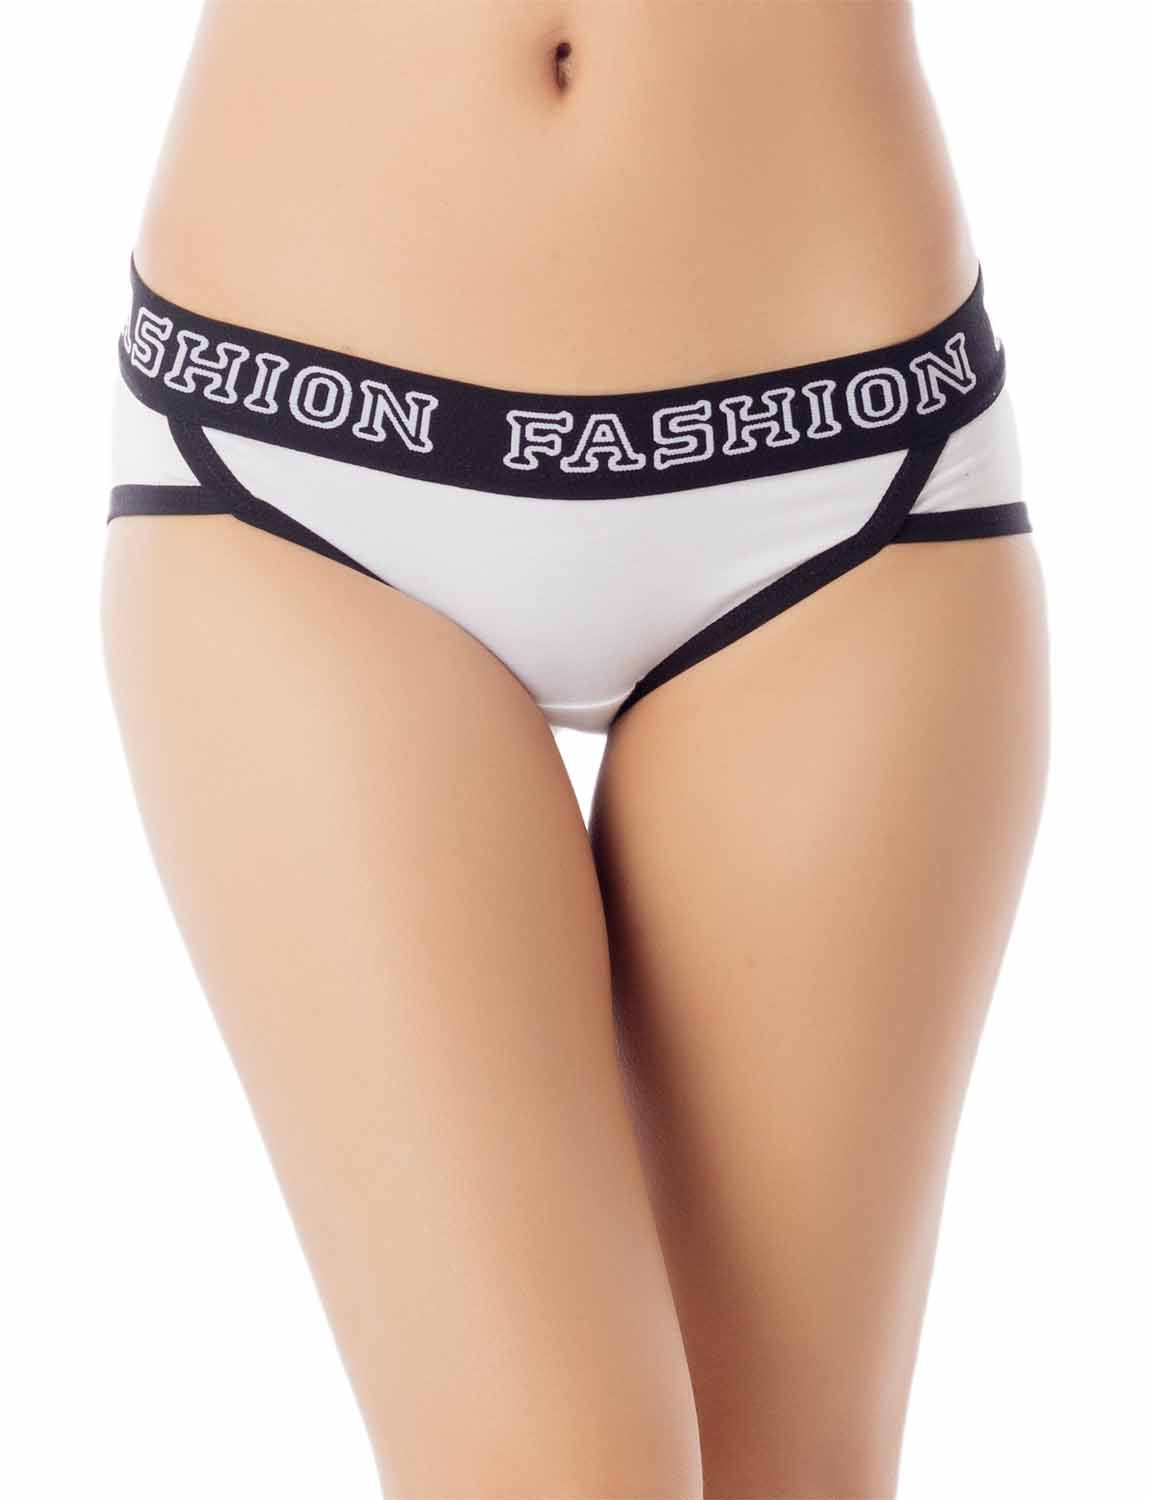 Women's Comfort Soft Cotton Sports Fashion Briefs Low Rise Hipster Panties